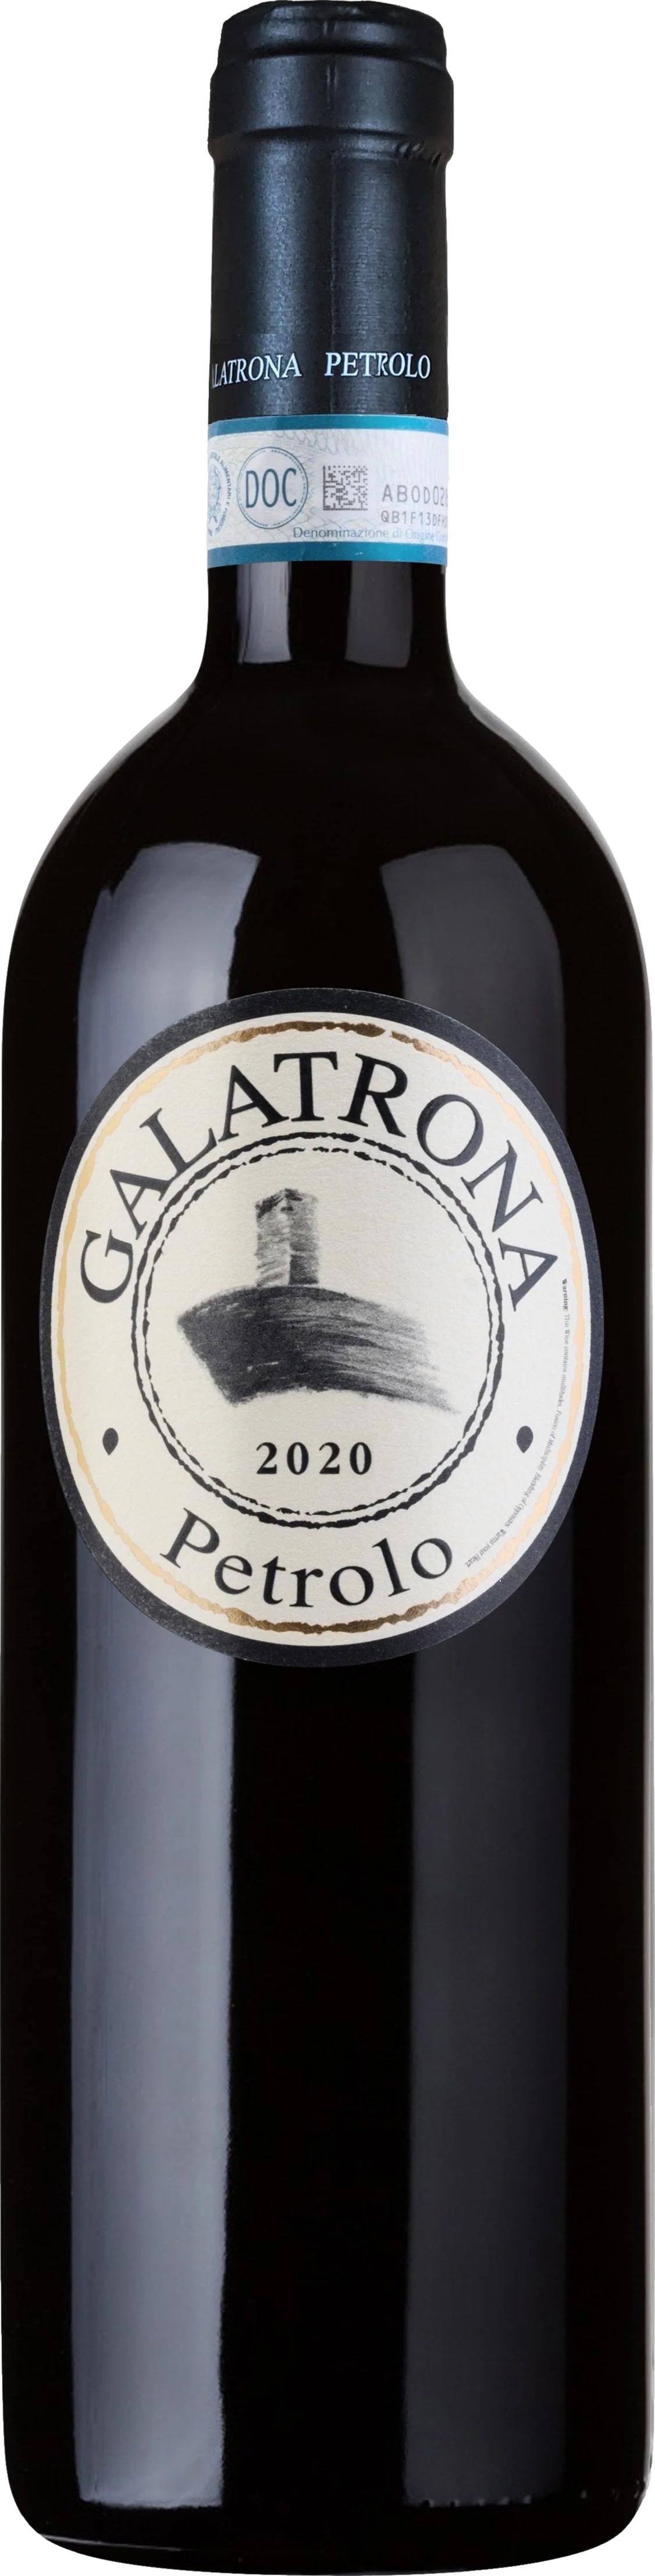 Petrolo Galatrona 2020 Červené 14.0% 0.75 l (holá láhev)